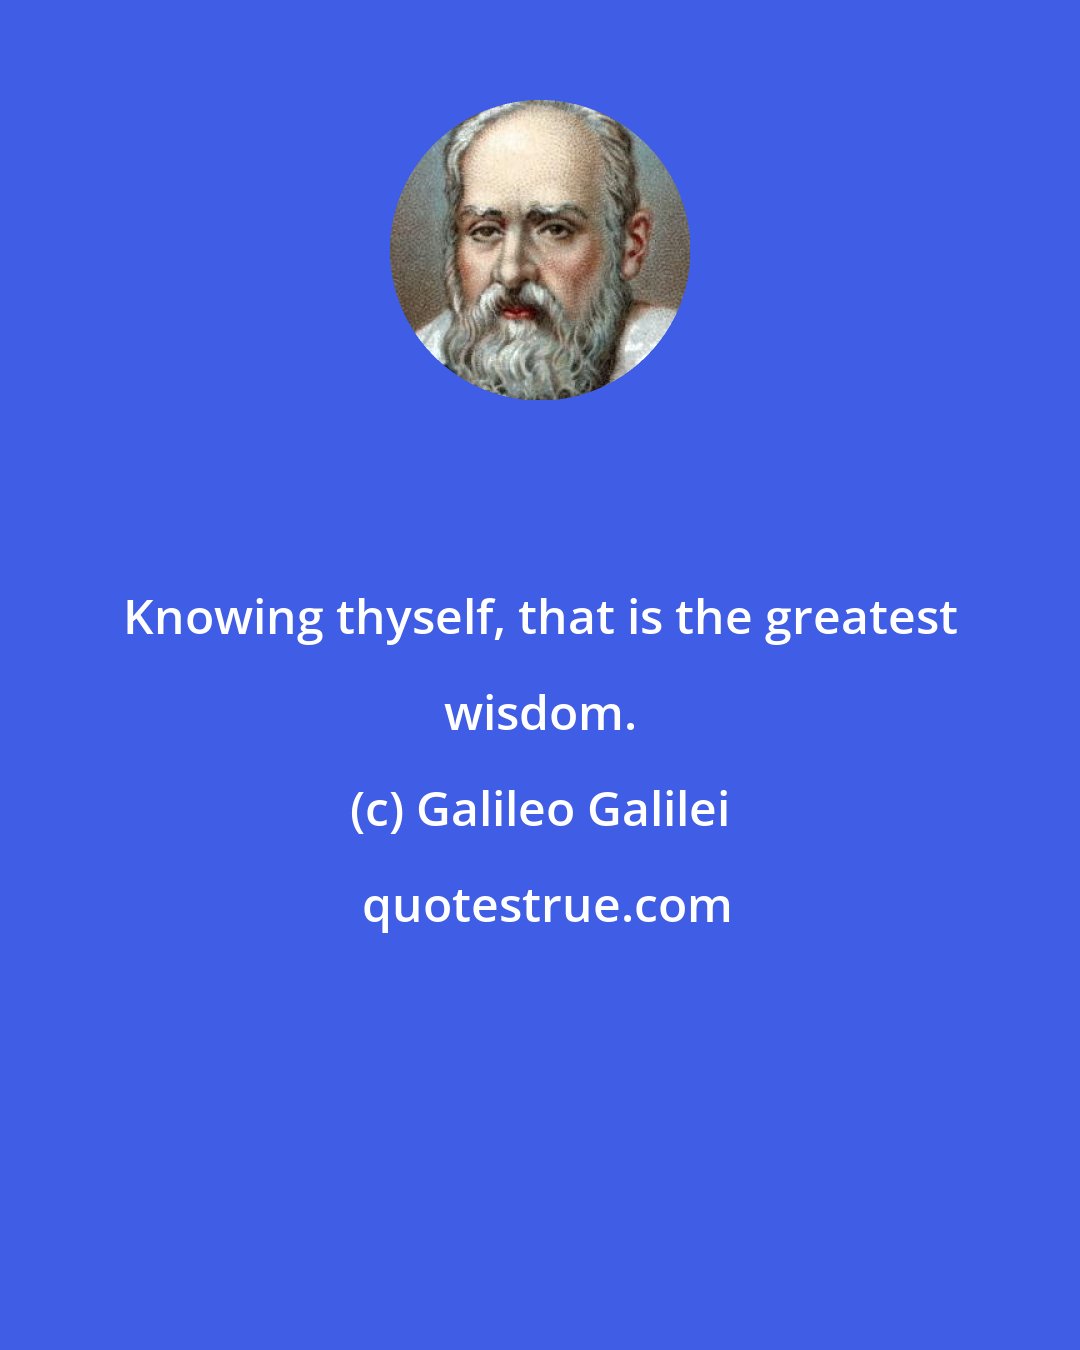 Galileo Galilei: Knowing thyself, that is the greatest wisdom.